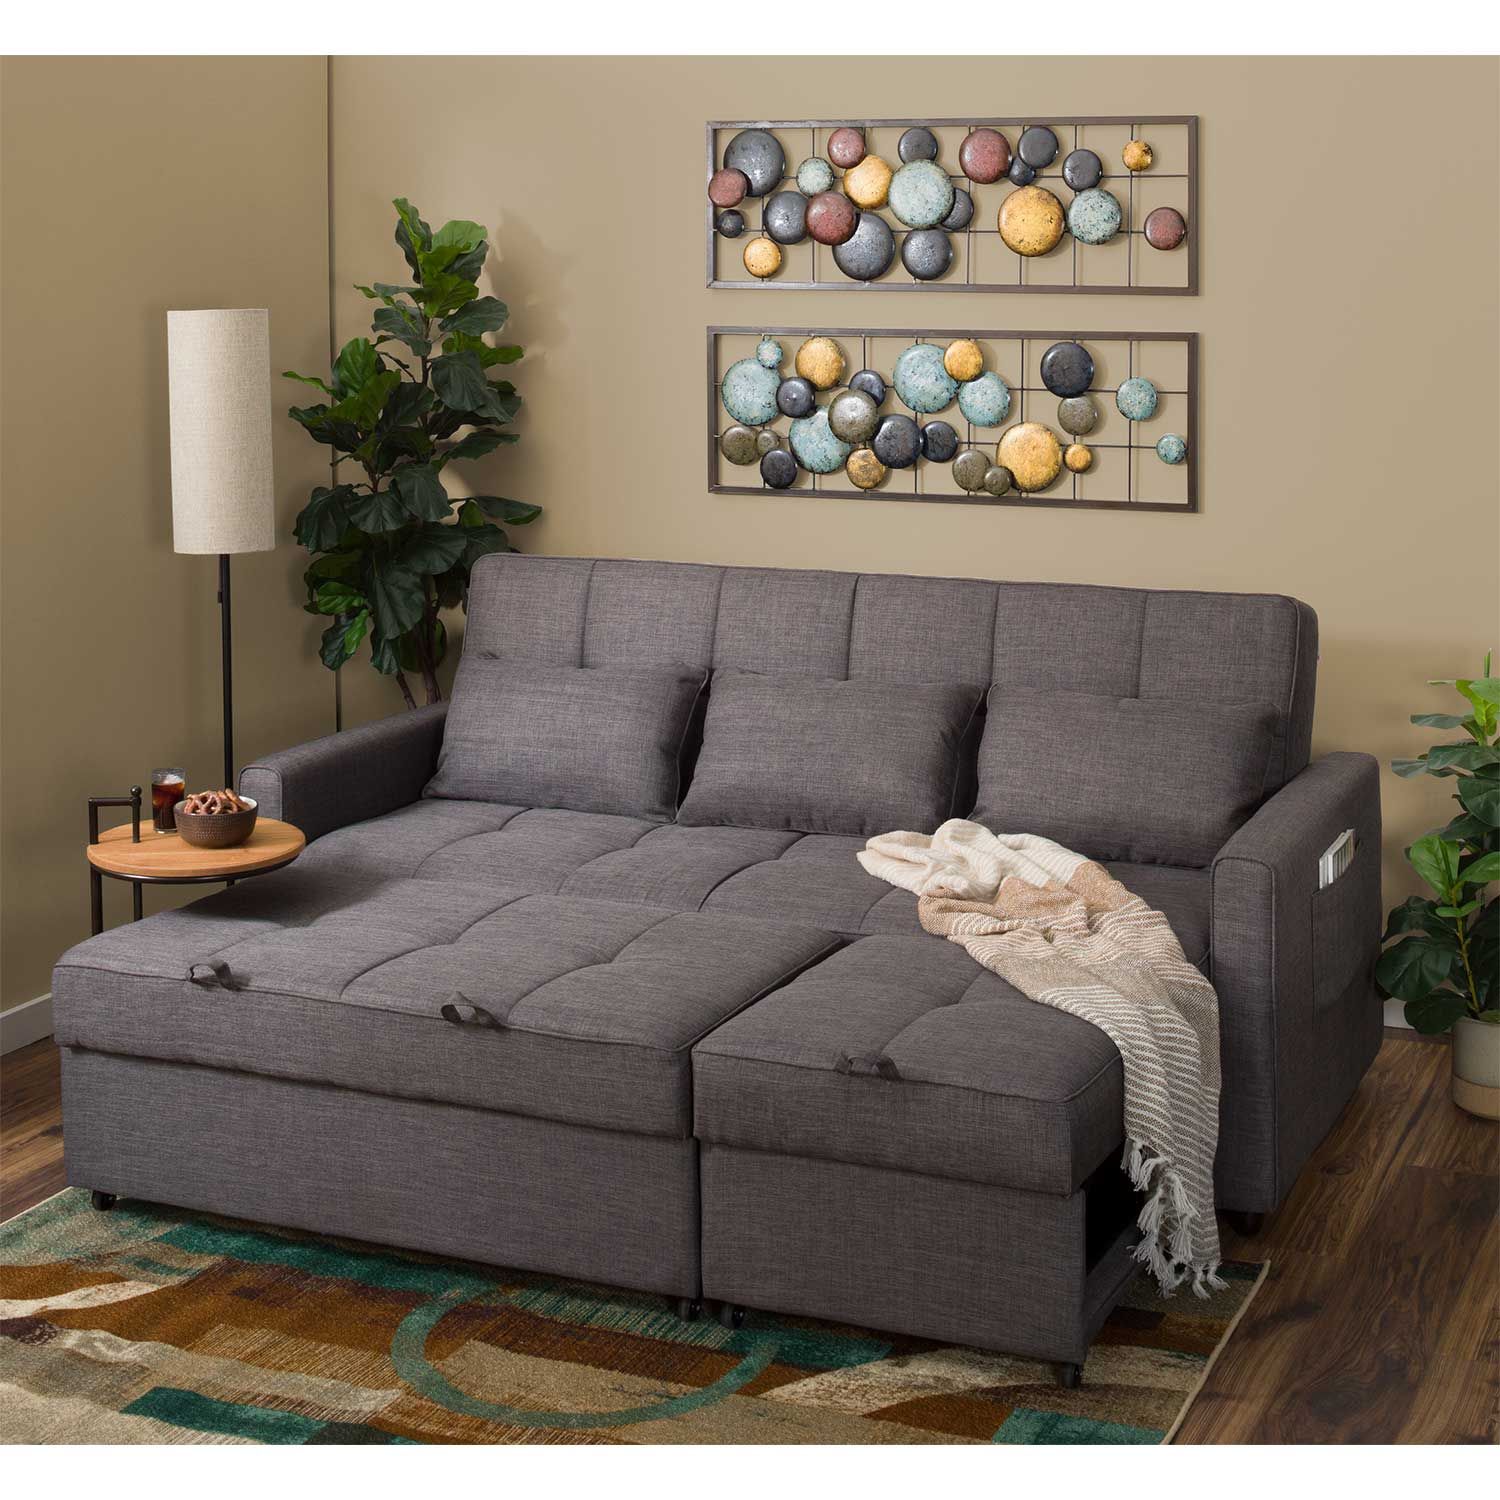 Skylar Pull Out Sleeper Sofa | 1a Skylar | Afw Within 3 In 1 Gray Pull Out Sleeper Sofas (Gallery 16 of 20)